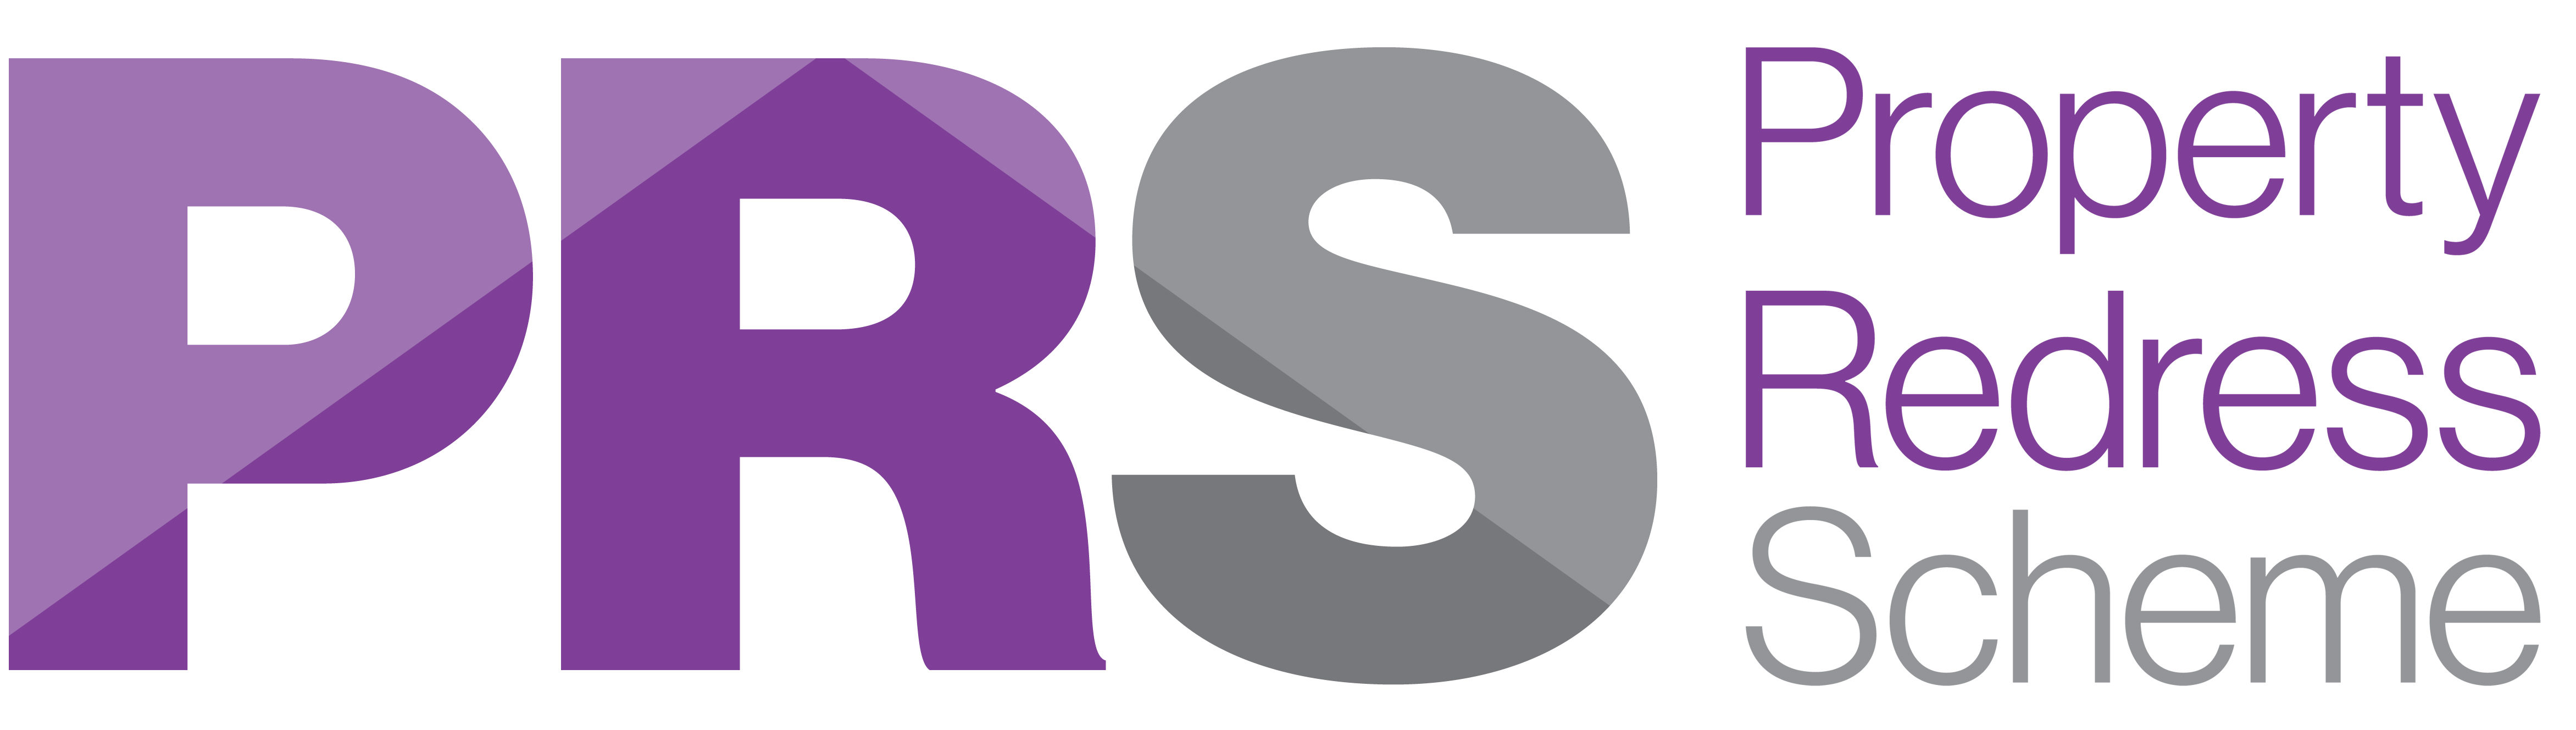 The property redress scheme PRS company logo